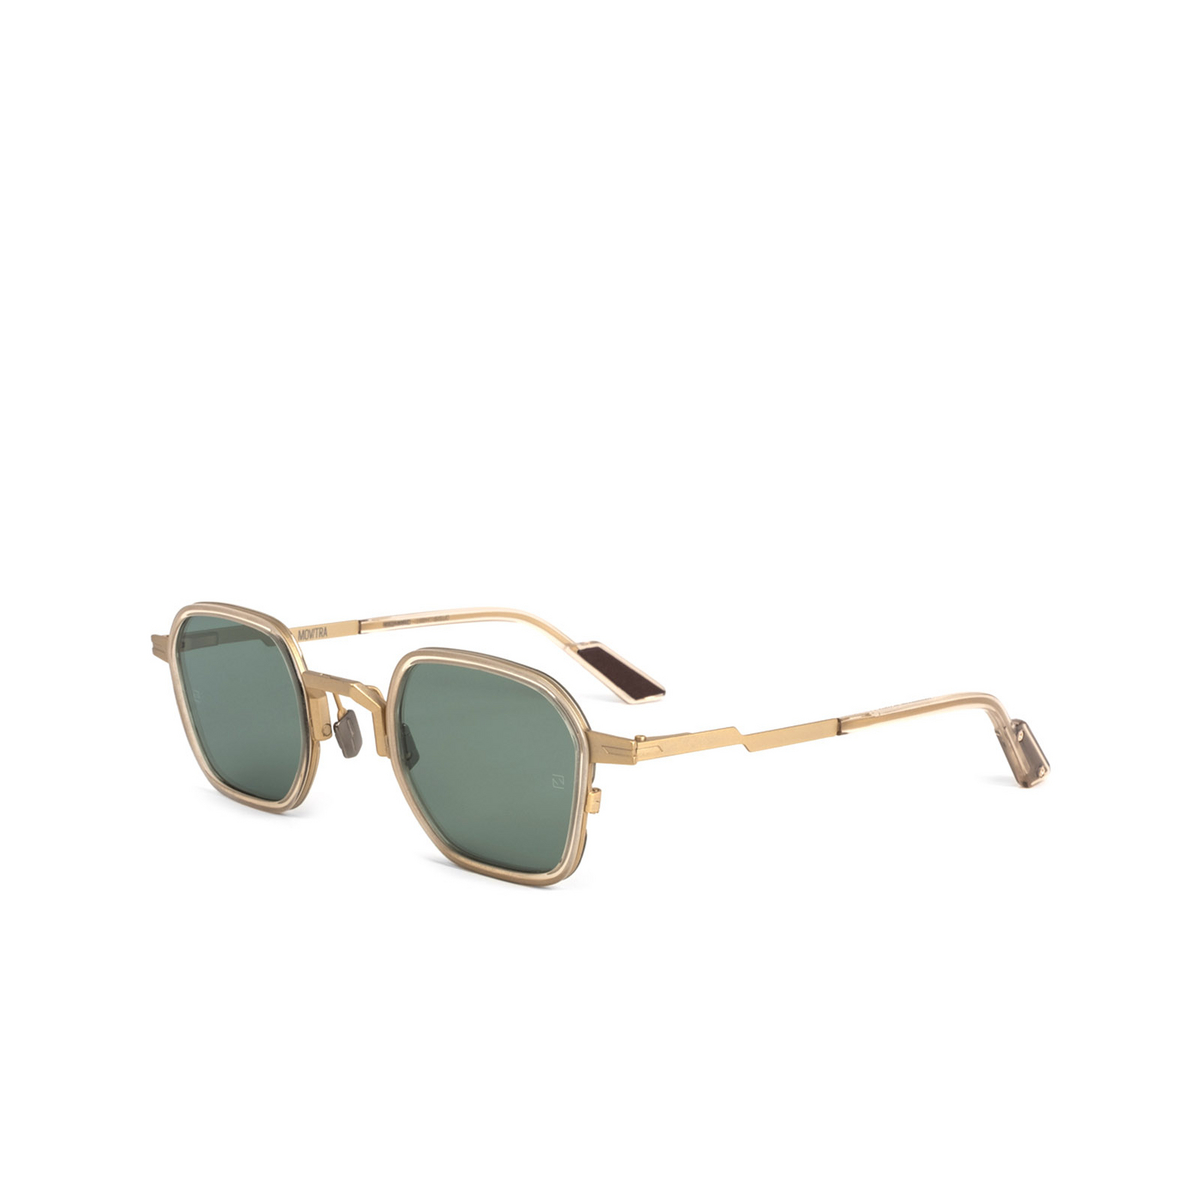 Movitra RICHARD Sunglasses GOLD SAND GREEN Light Gold & Crystal Sand - three-quarters view